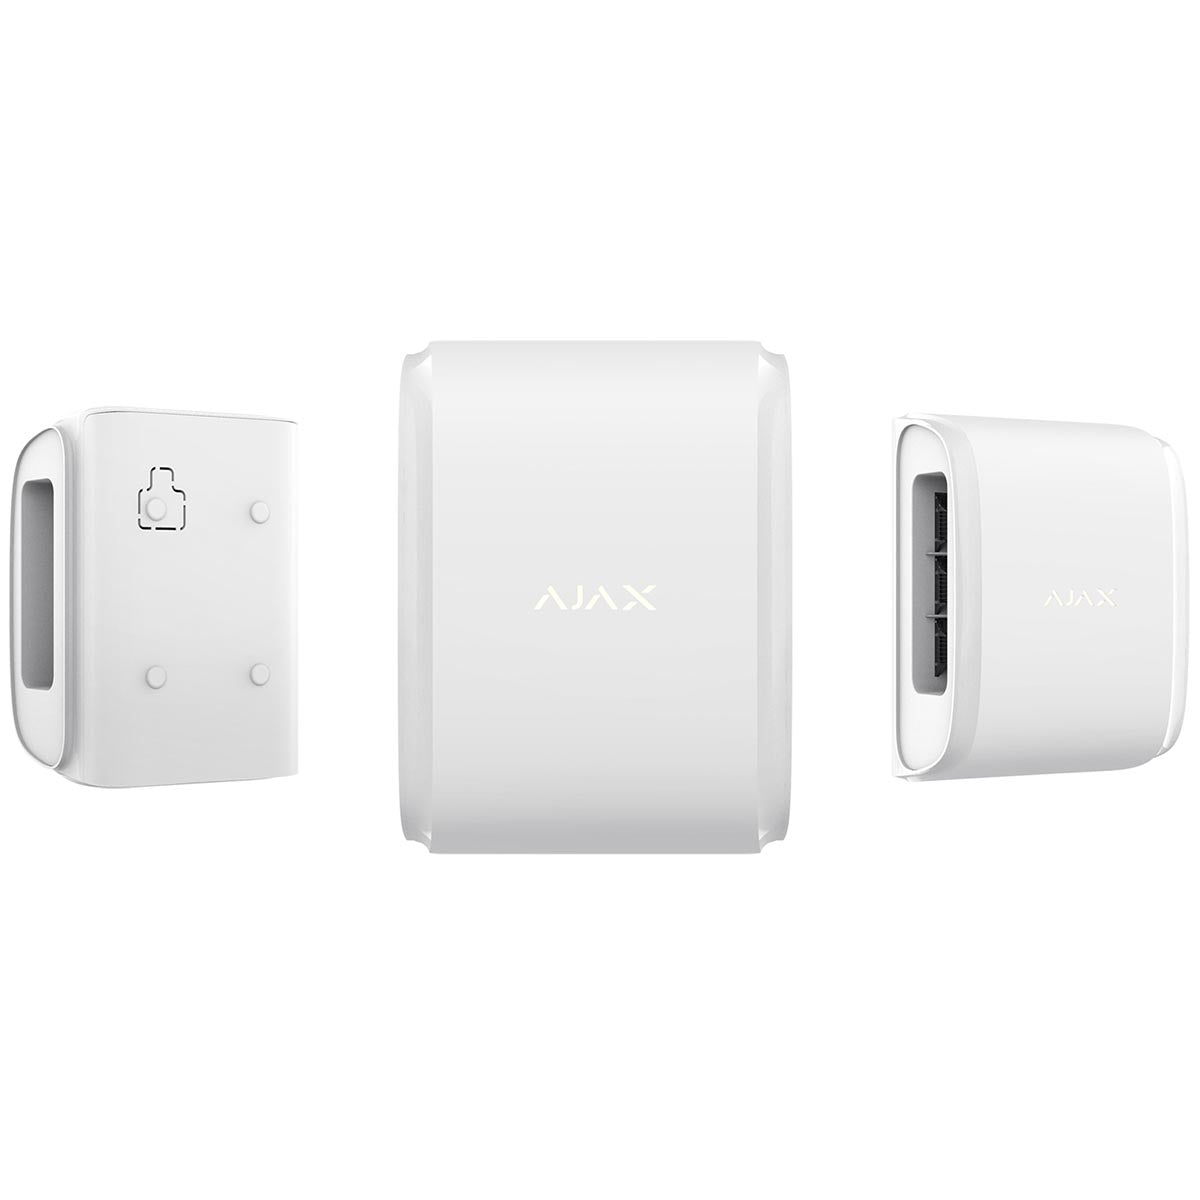 Ajax DualCurtain Outdoor White 3-Way View BD426W